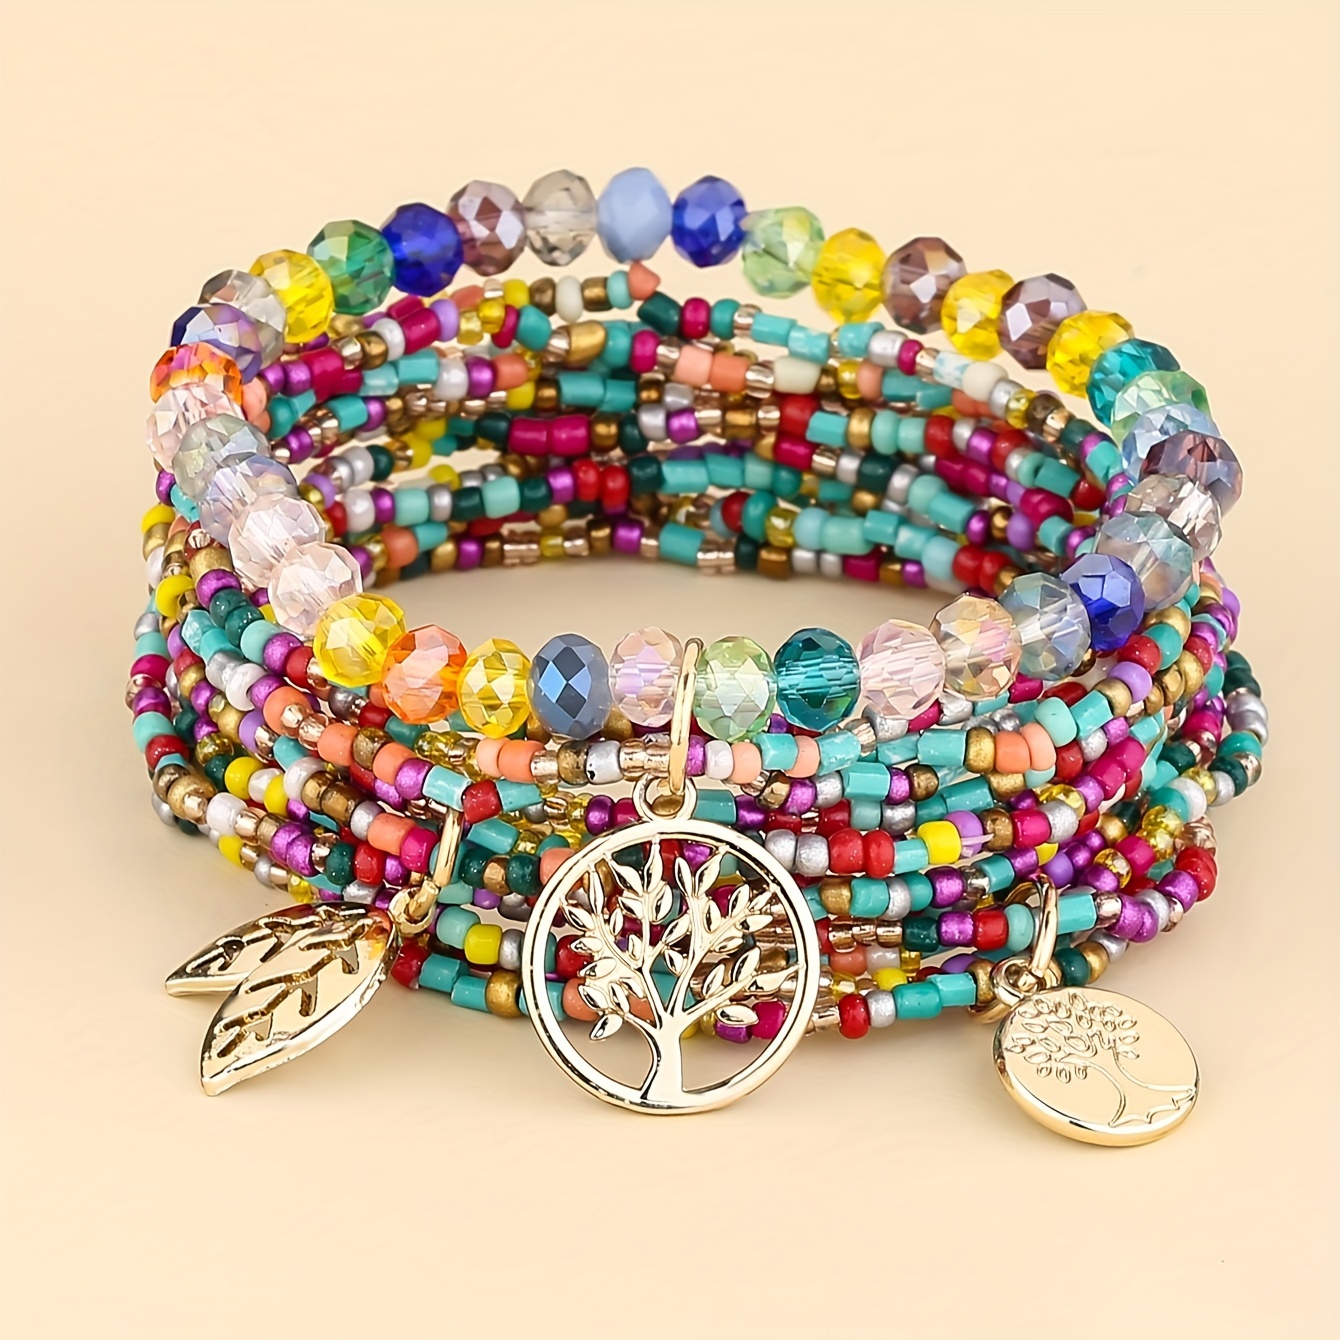 

3pcs Life Tree Leaf Charm Beaded Bracelet With Colorful Beads Boho Style Hand Jewelry Decoration